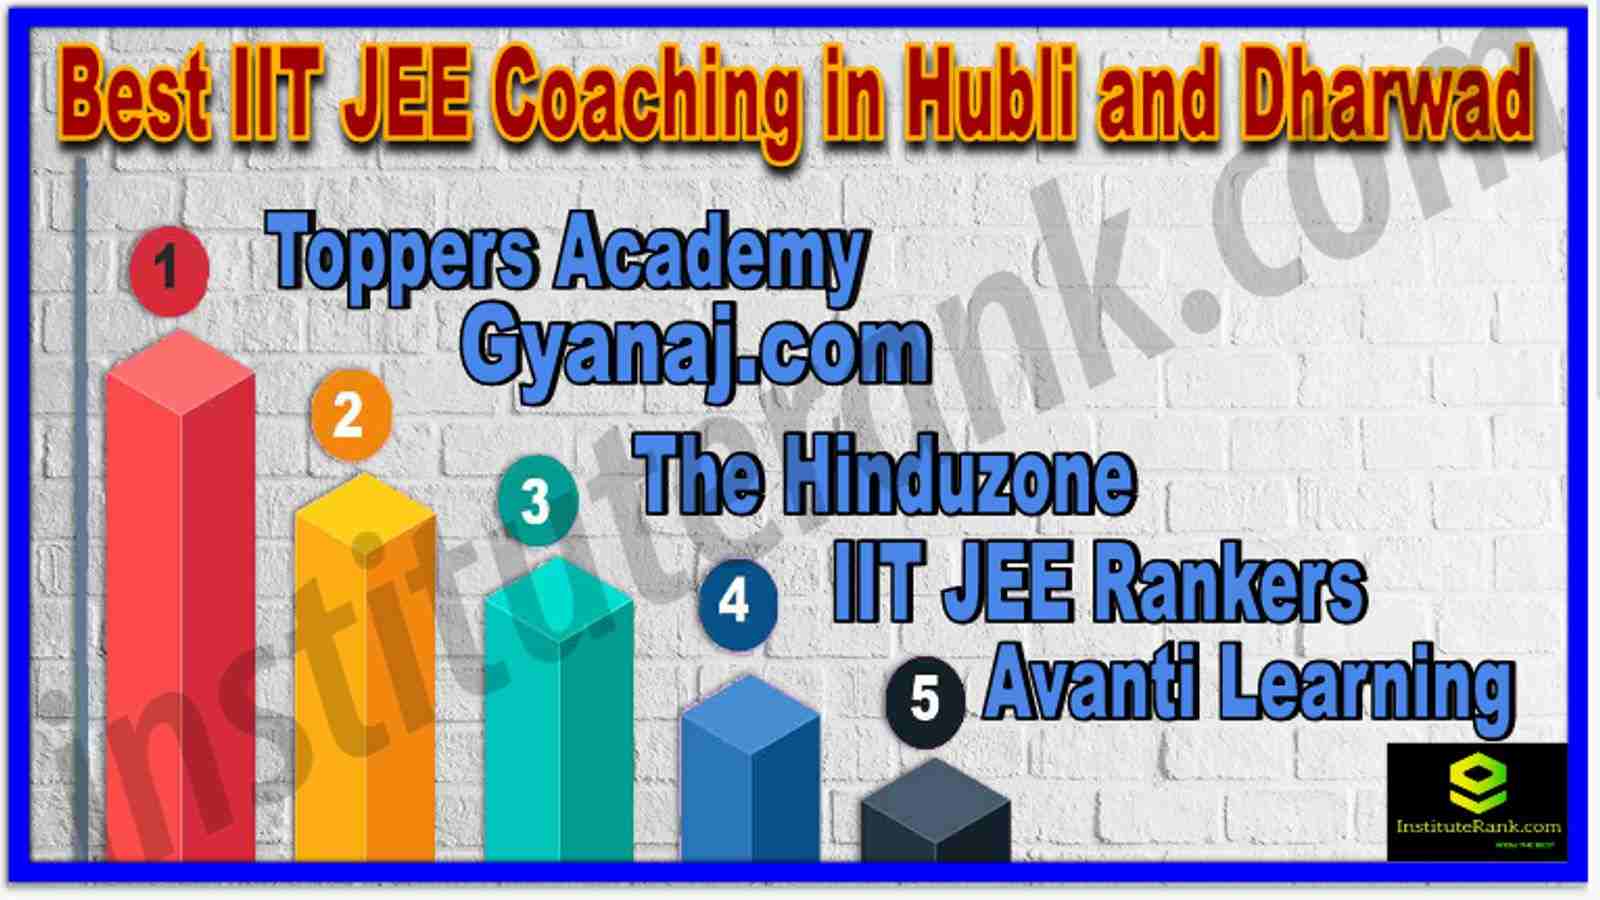 Best IIT JEE Coaching in Hubli and Dharwad